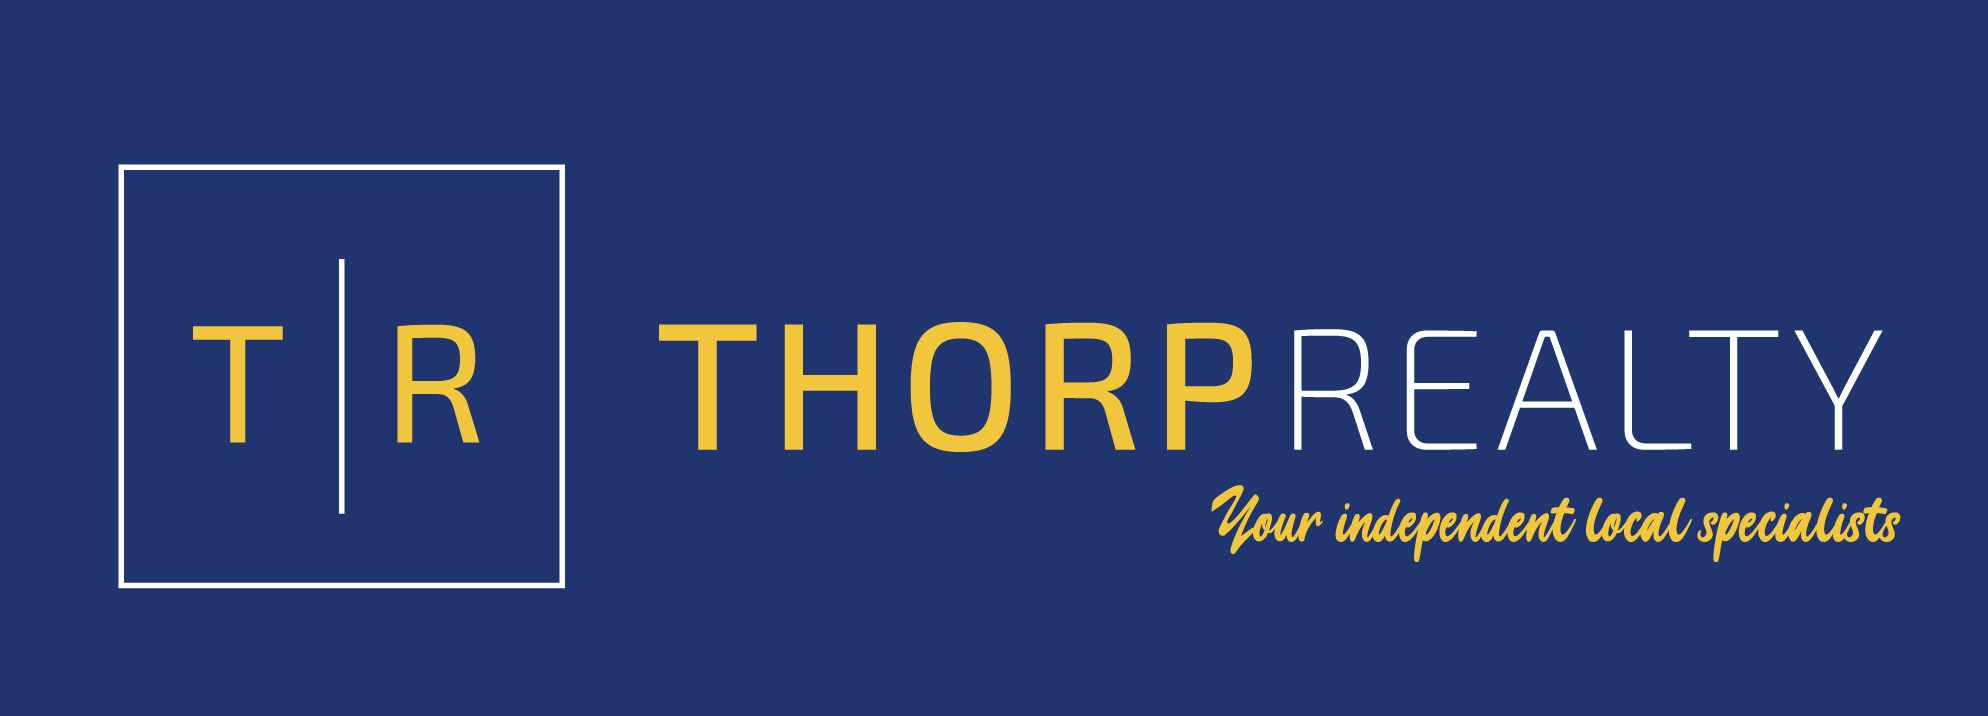 Thorp Realty Pty Ltd's logo